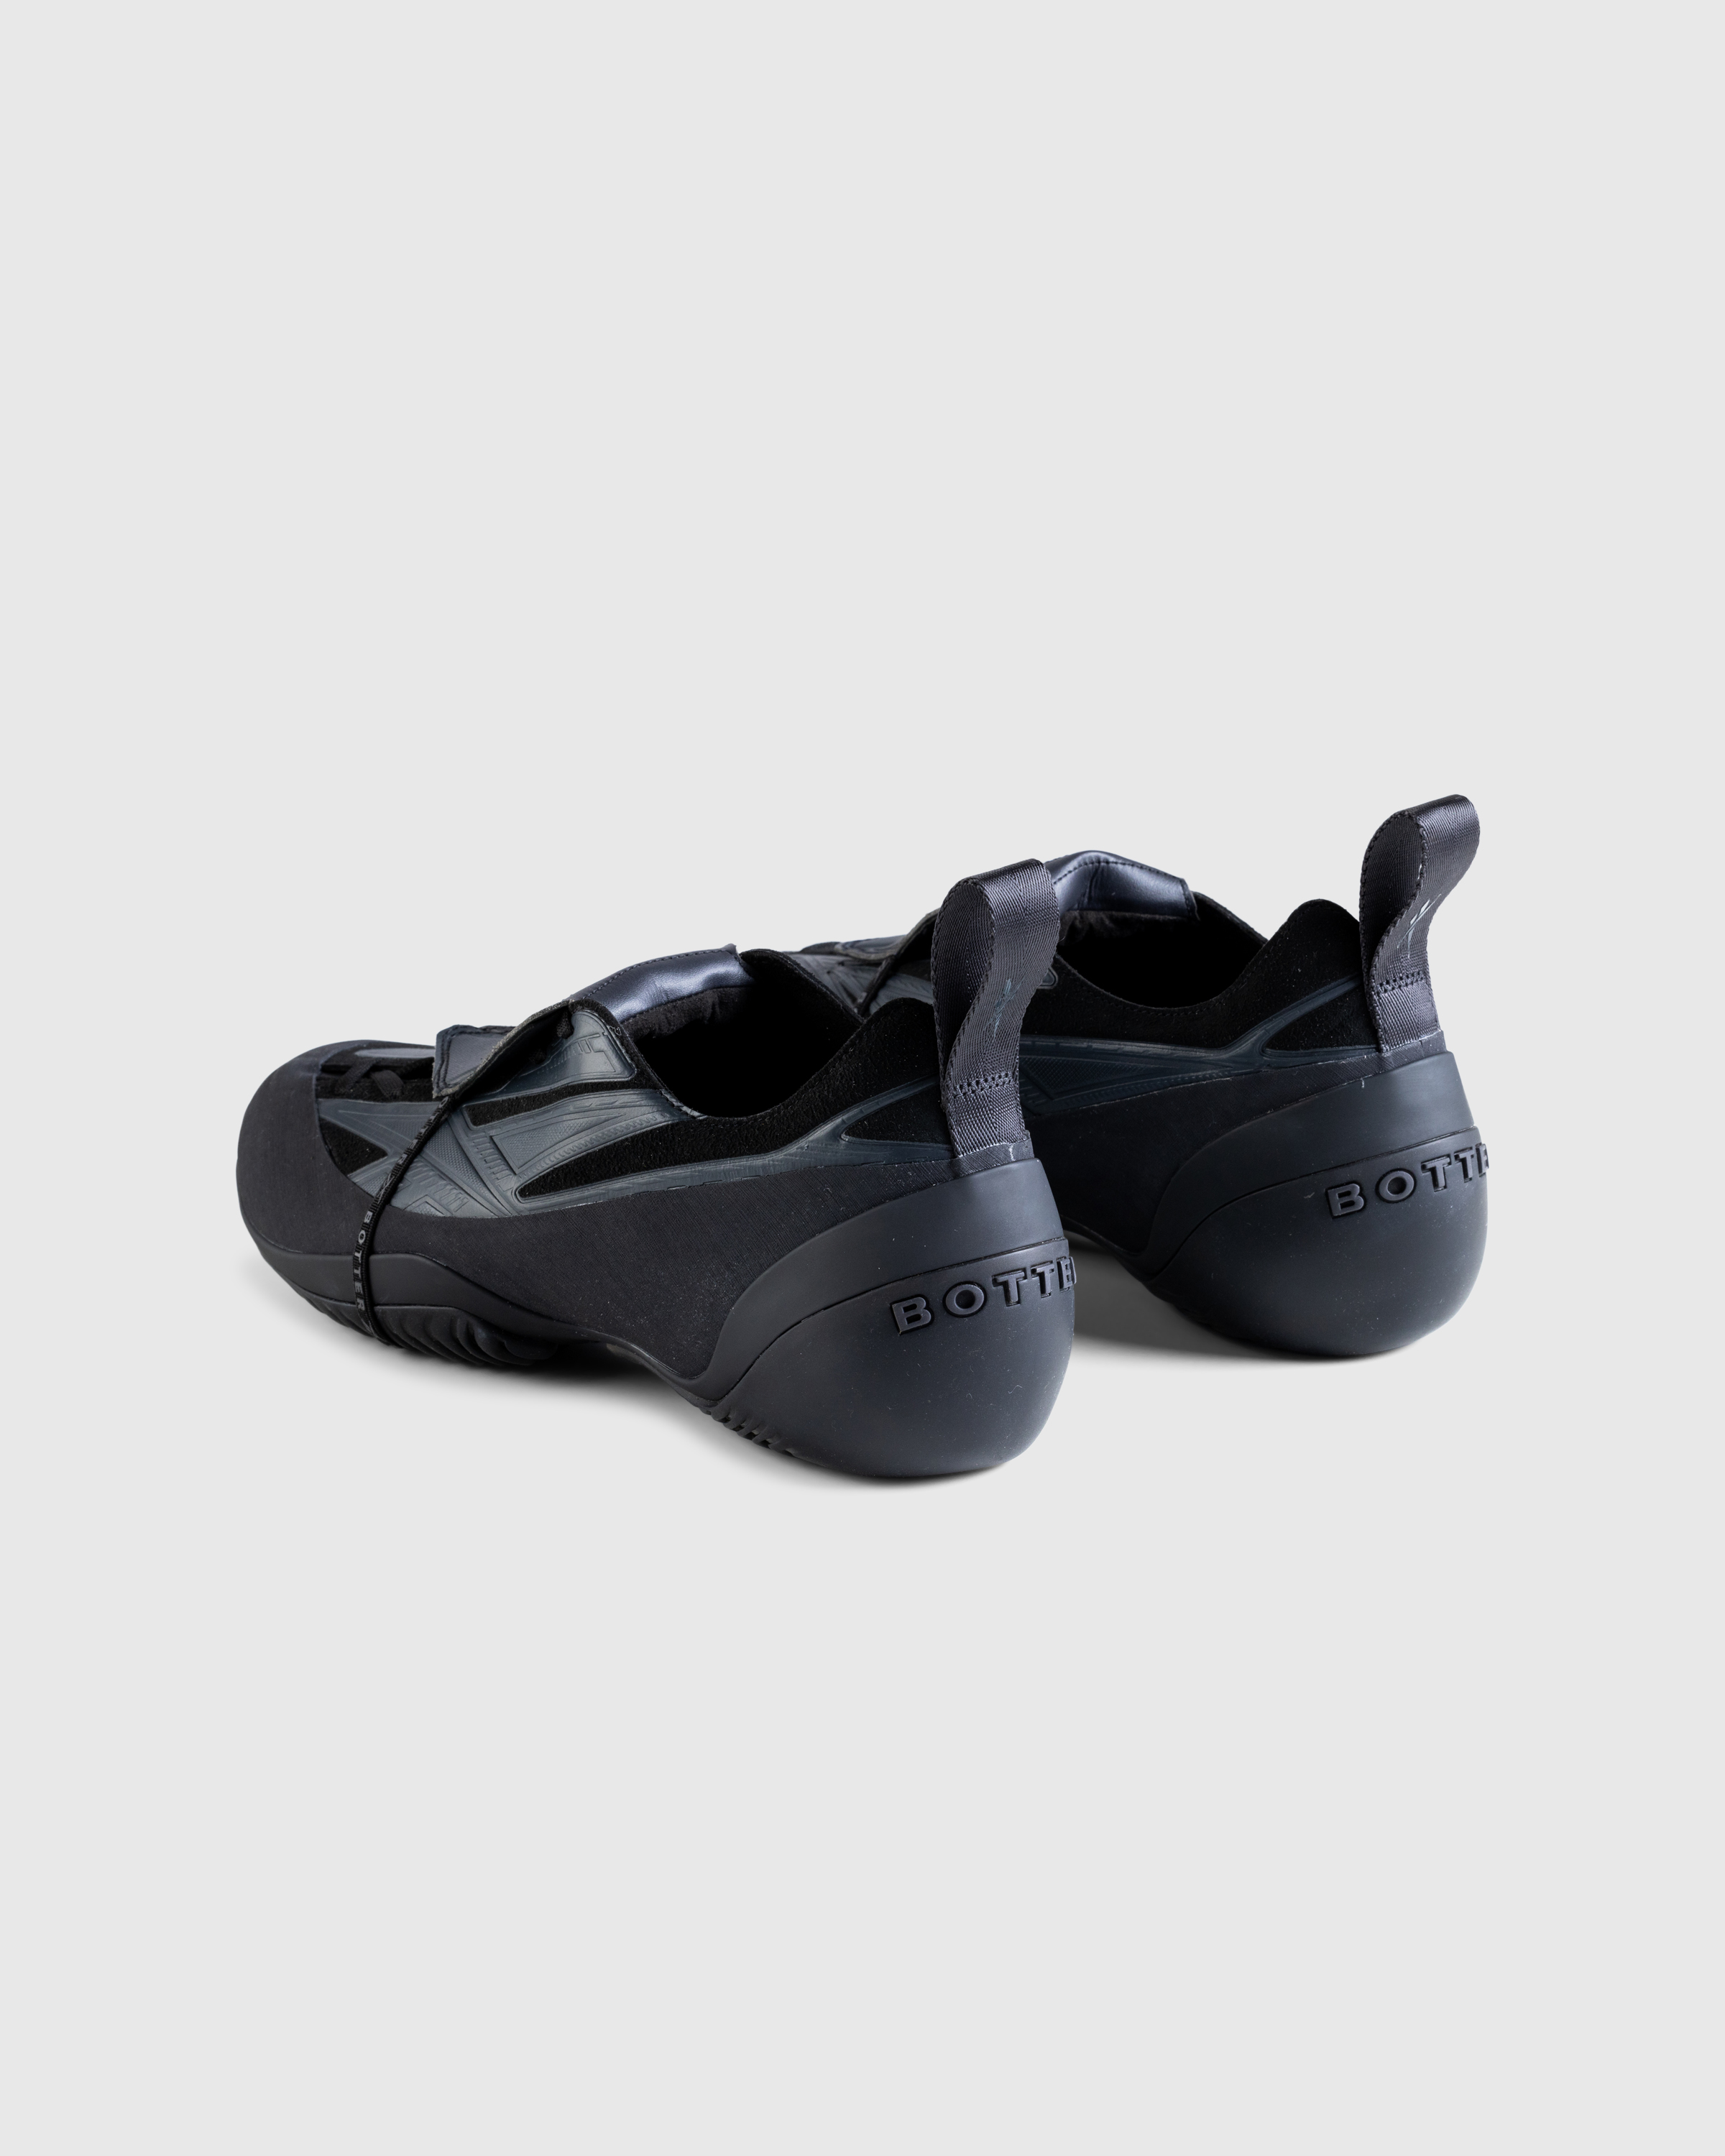 Reebok x Botter – Energia Bo Kèts Black - Sneakers - Black - Image 4